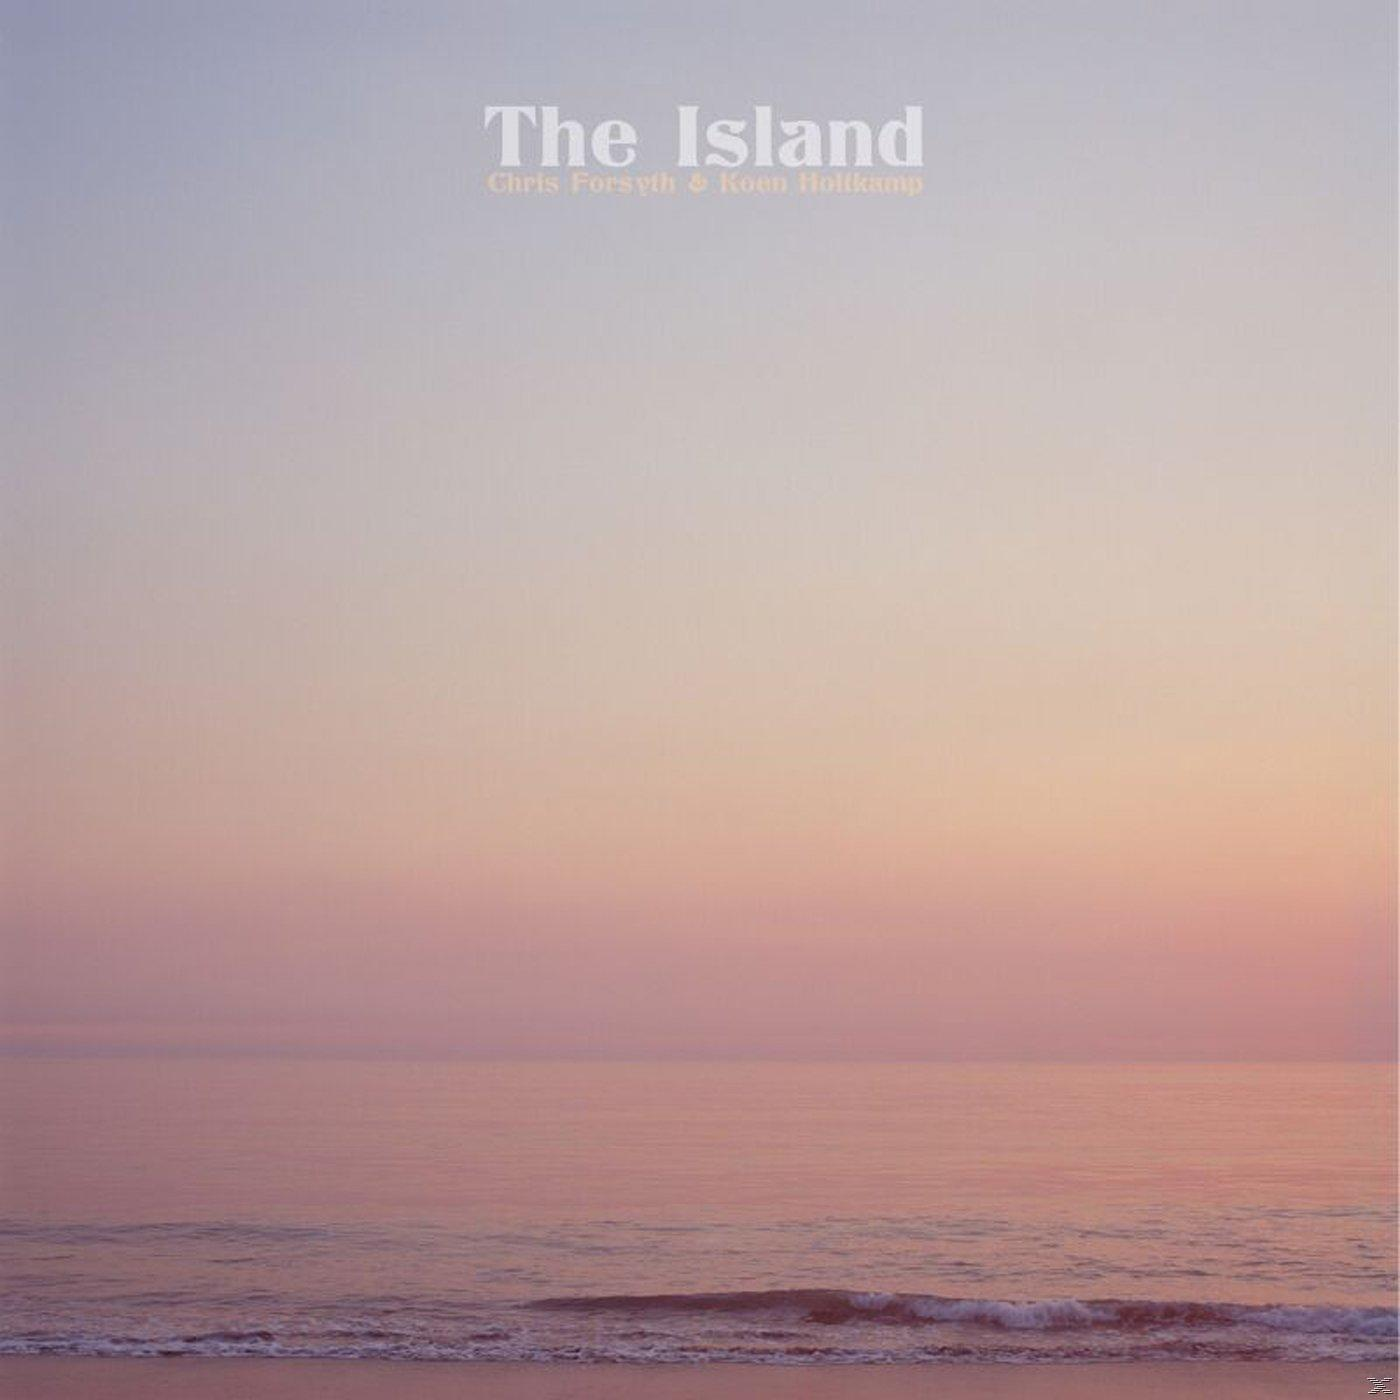 Chris -& Island Forsyth Koen (CD) - Holtkamp- - The